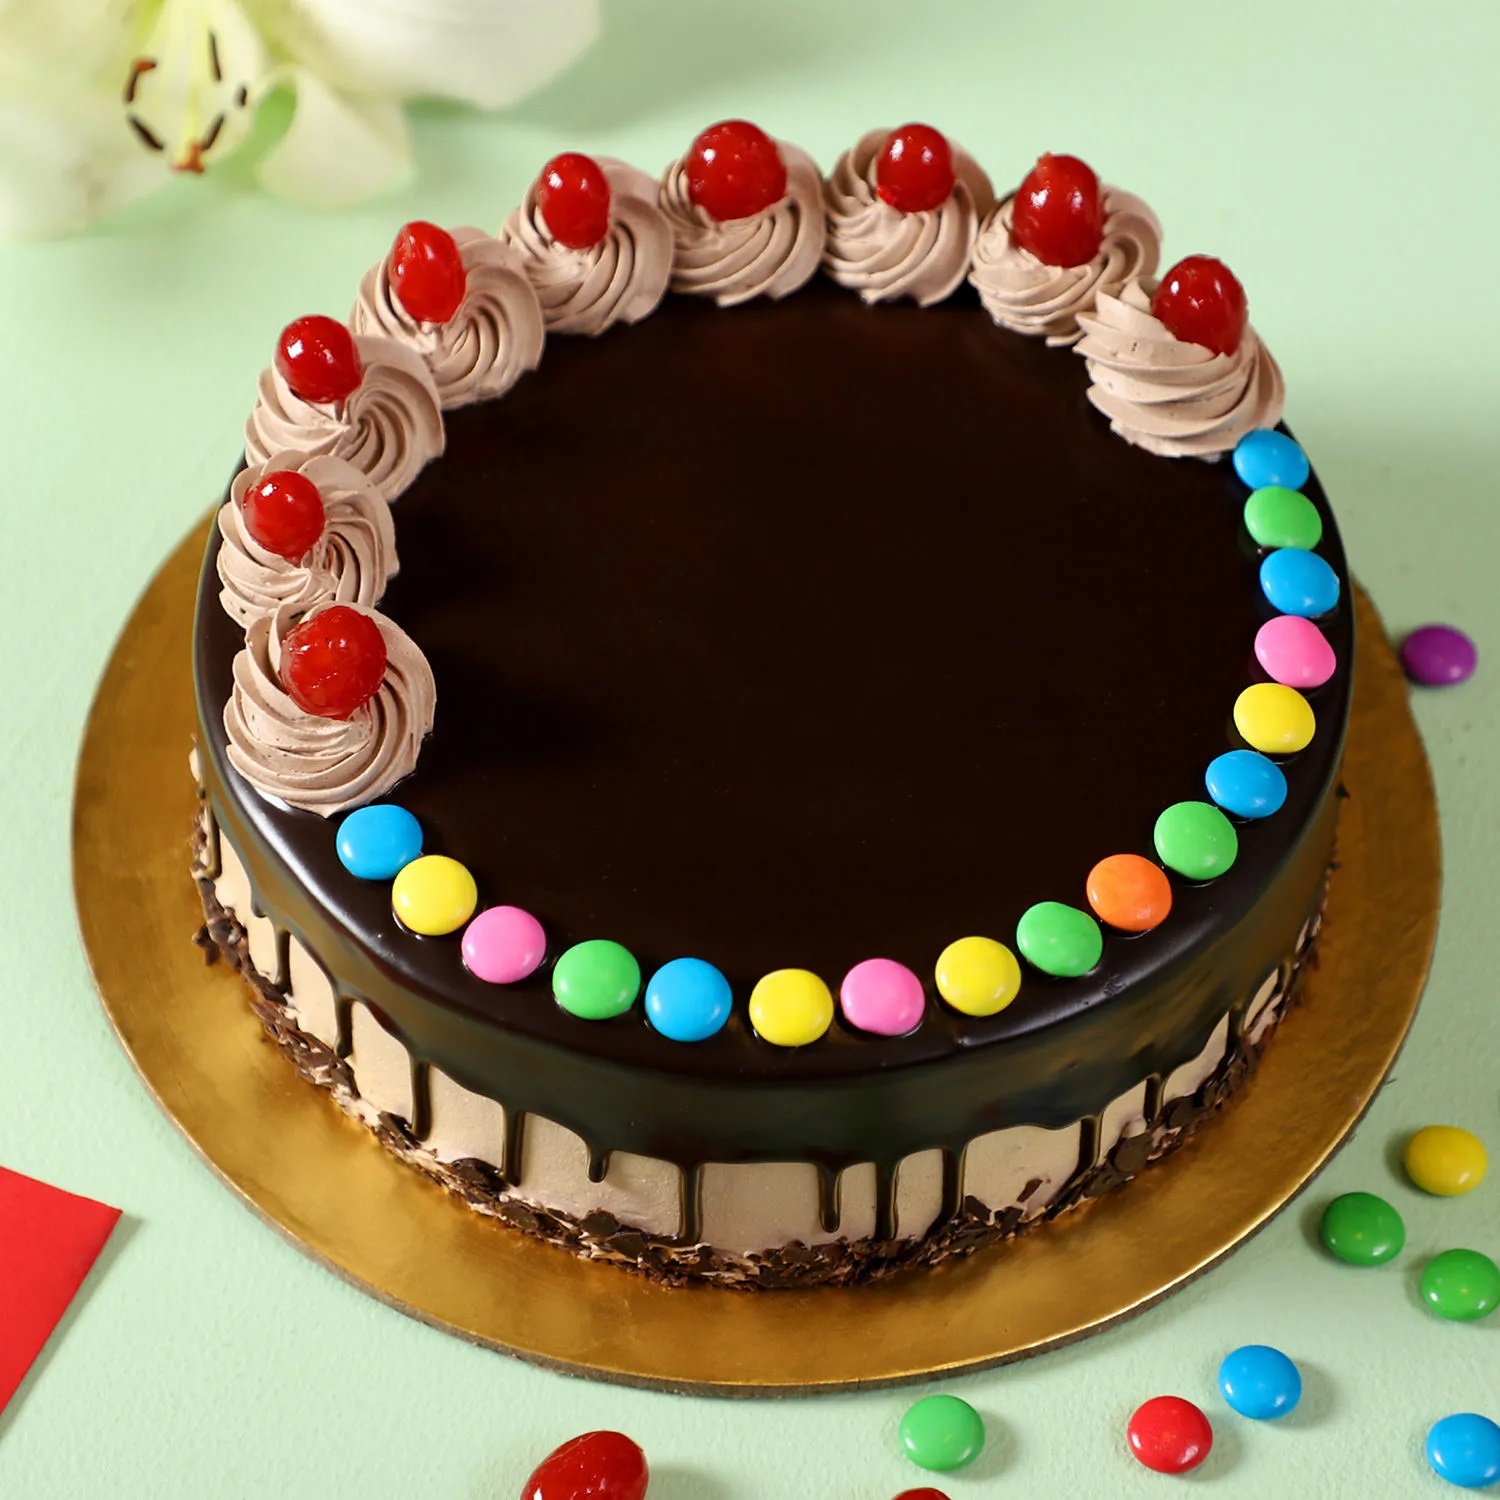 Joyce's birthday cake | yummy cake from sunset bakery!! we h… | Flickr